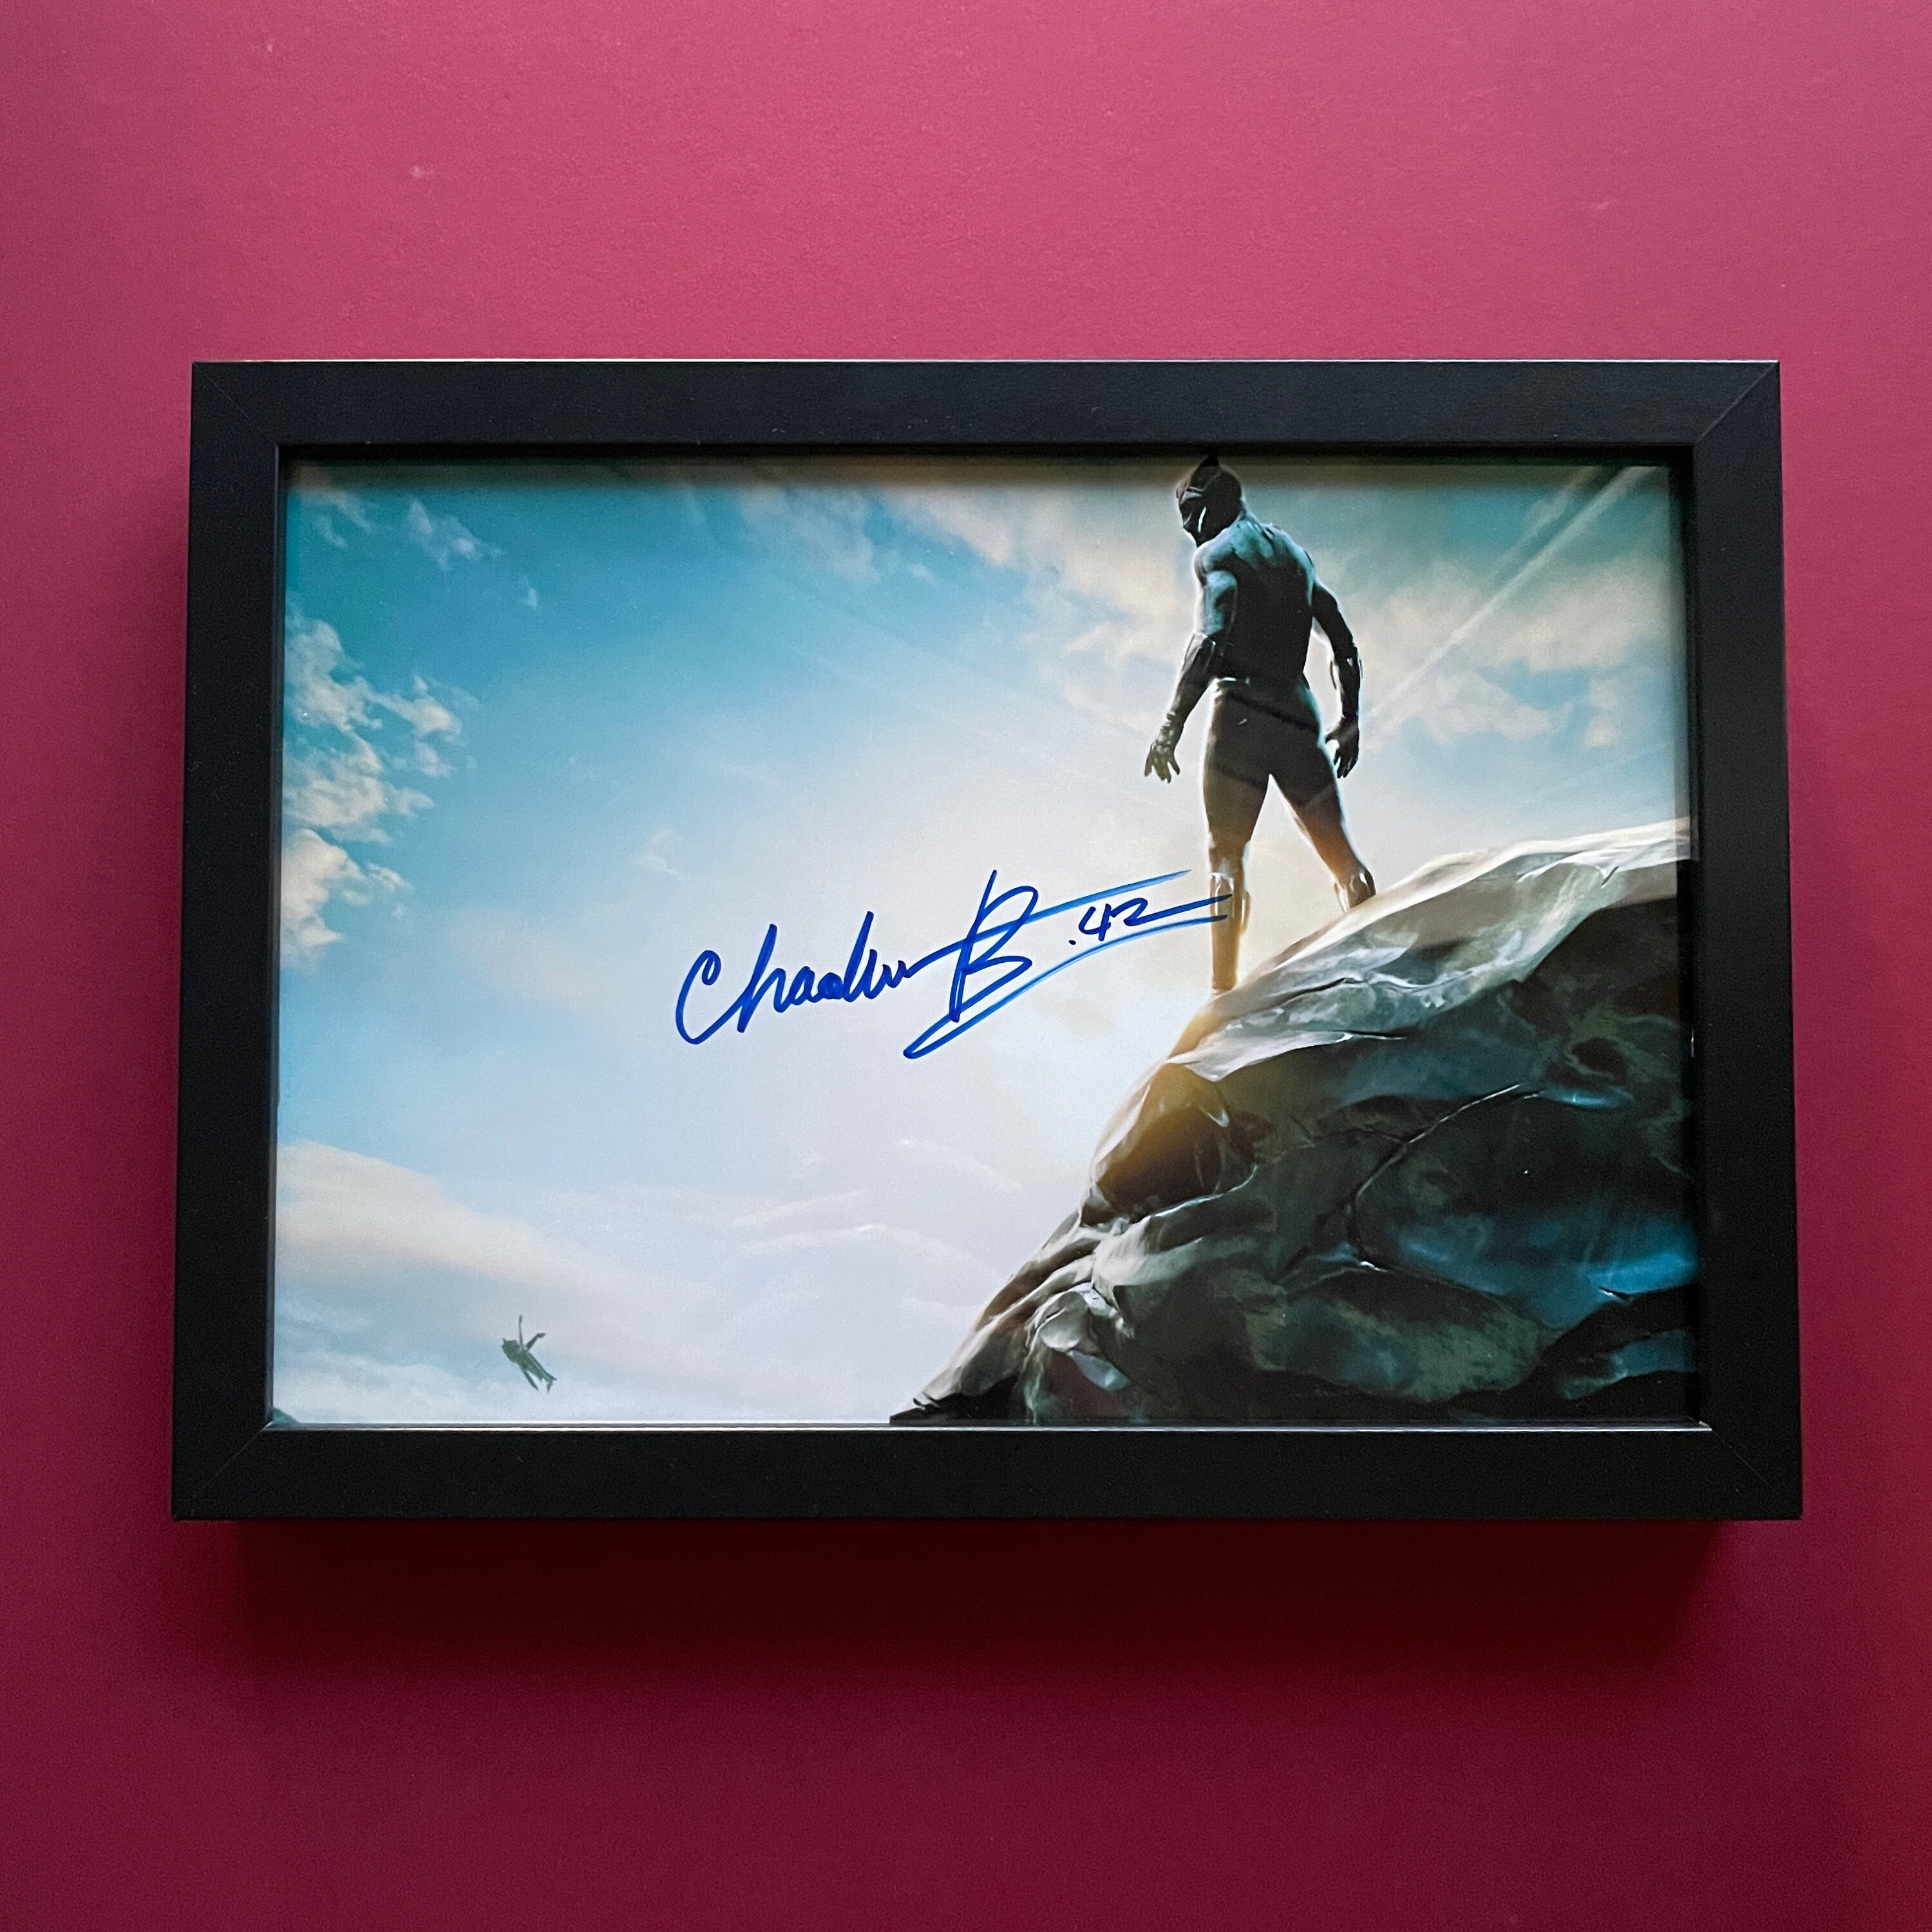 Chadwick Boseman “42” Signed Movie Poster PSA/DNA Jackie Robinson